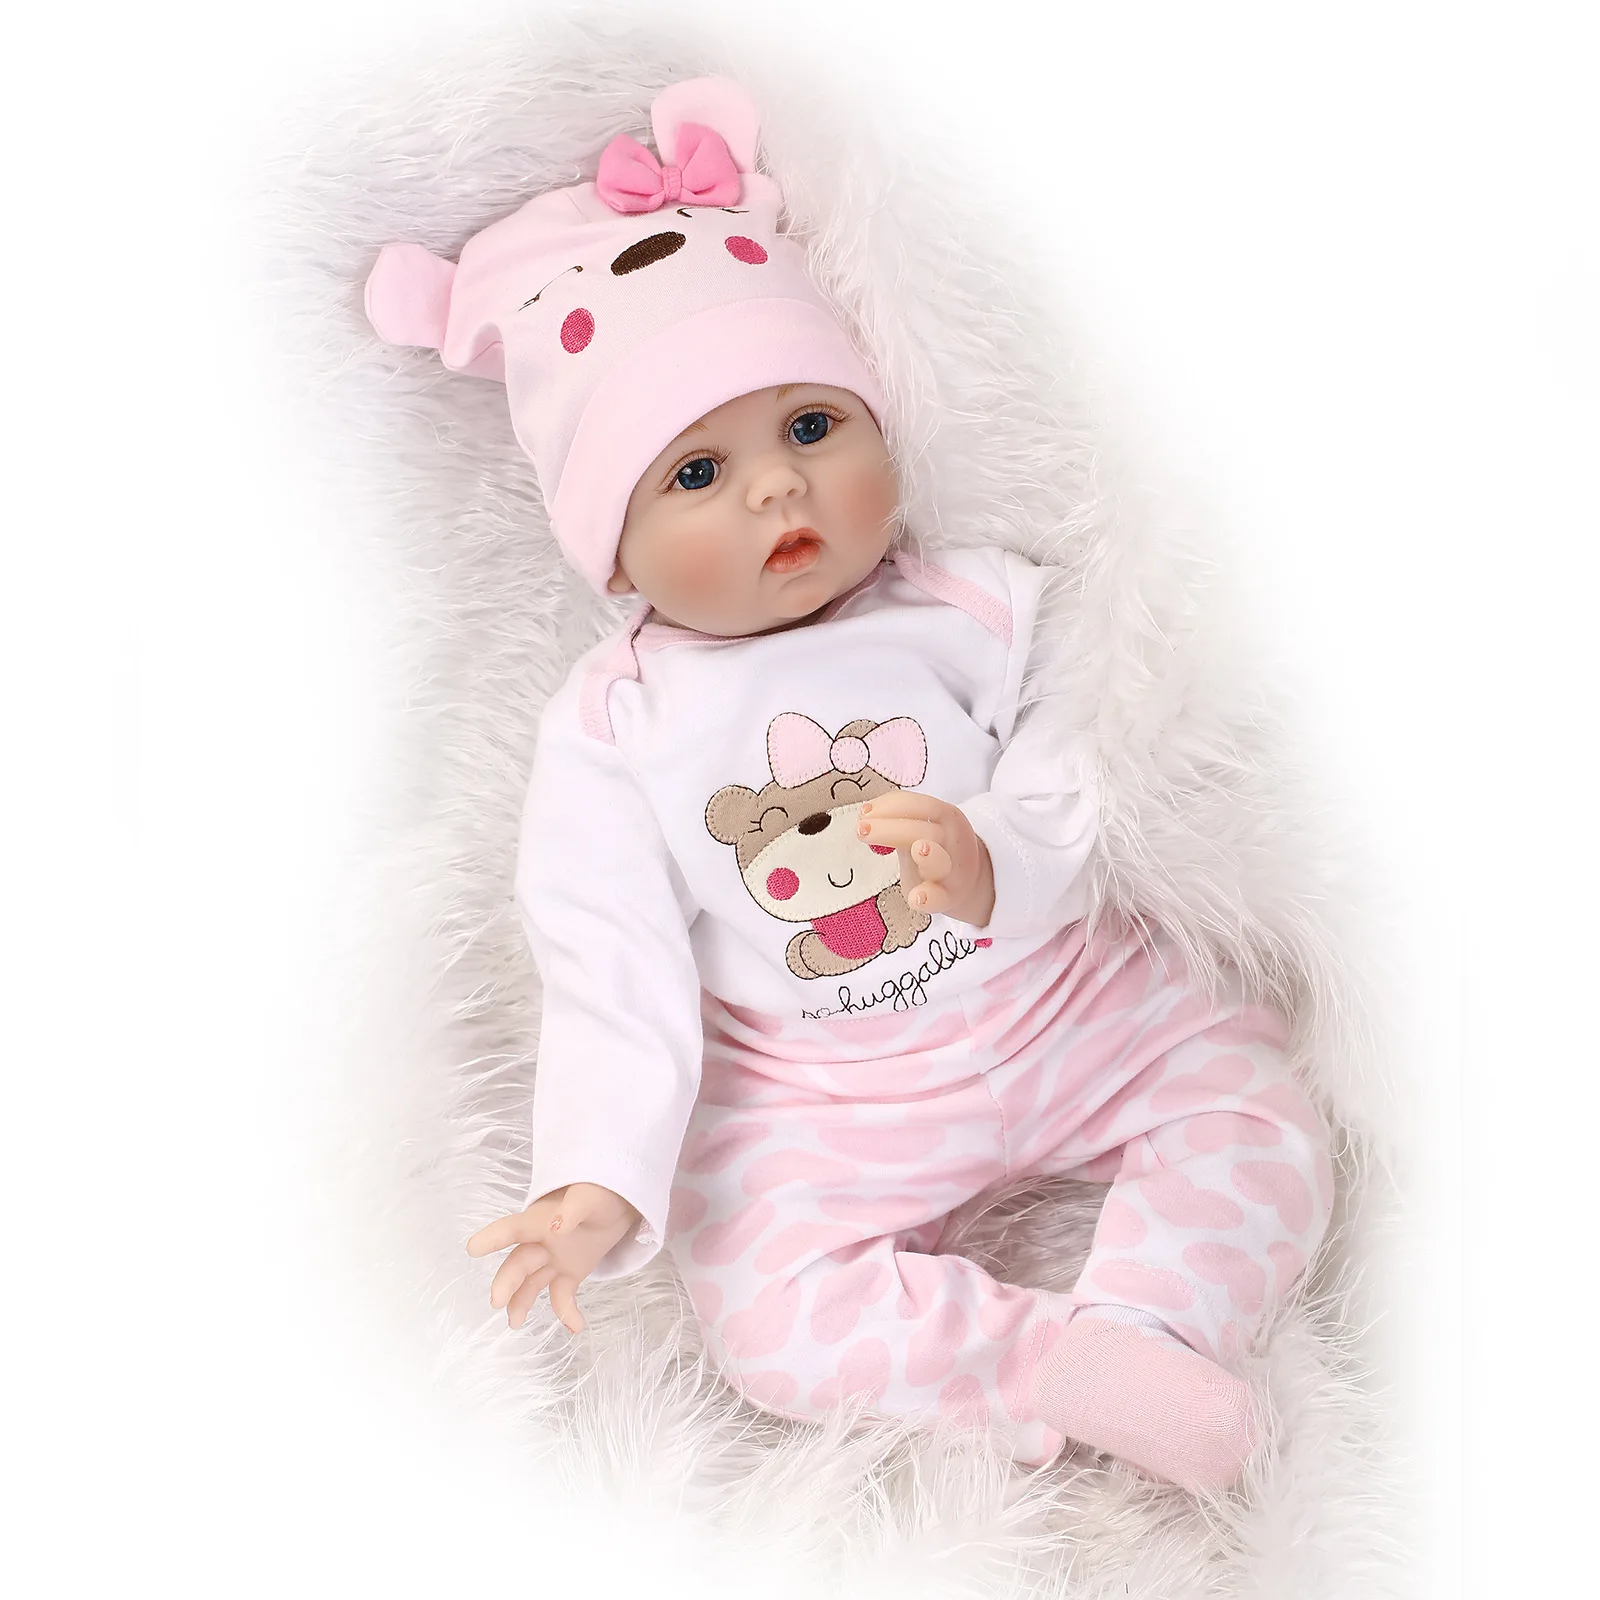 55cm Silicone Reborn Baby Doll Toys Lifelike Soft Cloth Body Newborn Babies  Bebes Reborn Doll Birthday Gift Girls Brinquedos - Buy Liftlike Reborn Baby  Doll,Reborn Baby Doll,Cloth Baby Doll Toy Product on